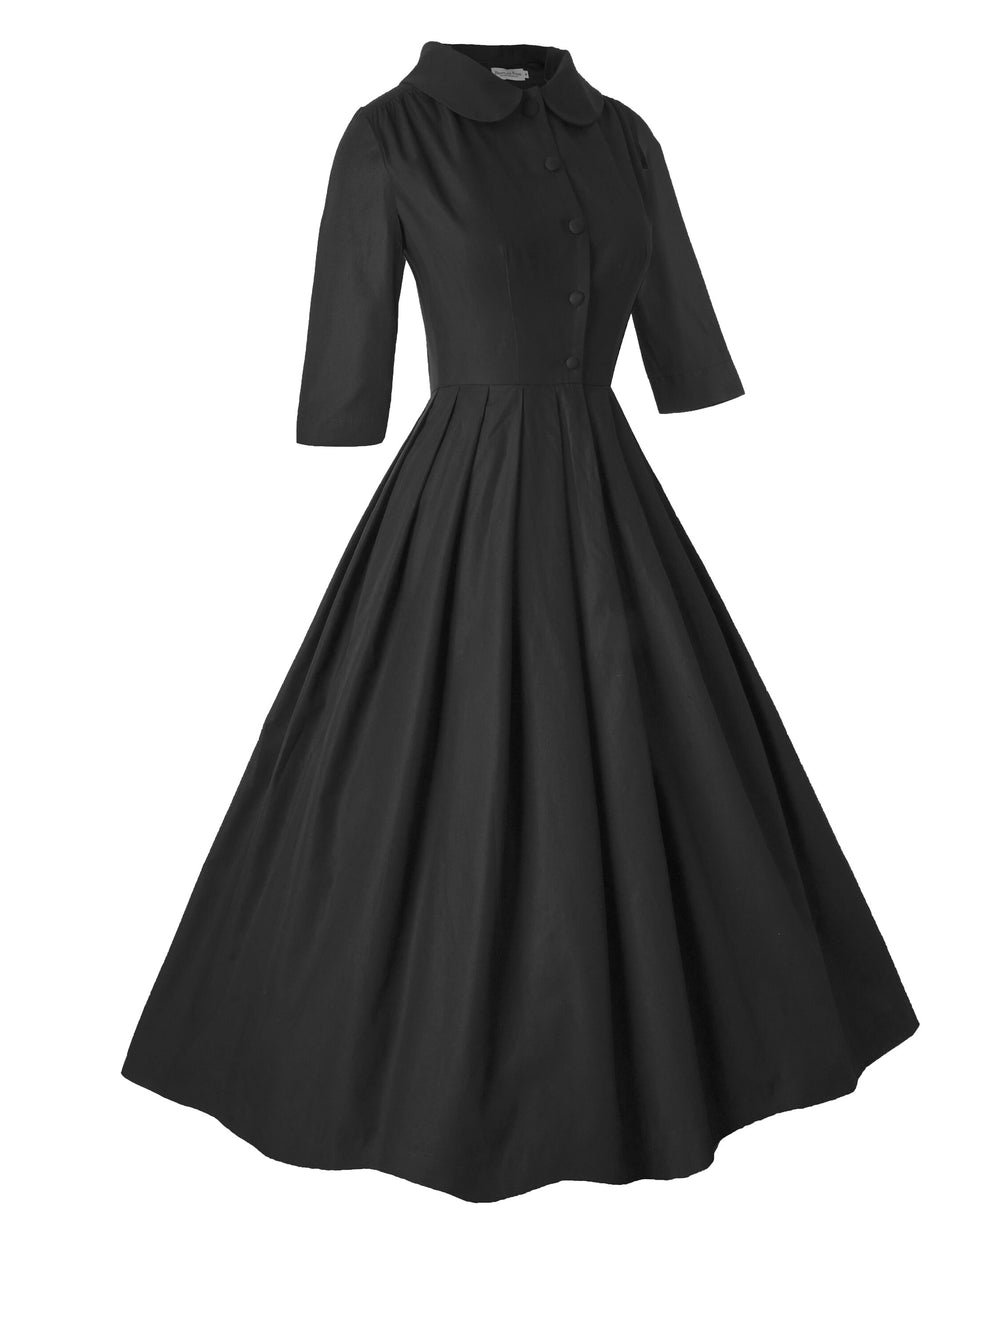 RTS - Size S - Wendy Dress in Raven Black Cotton